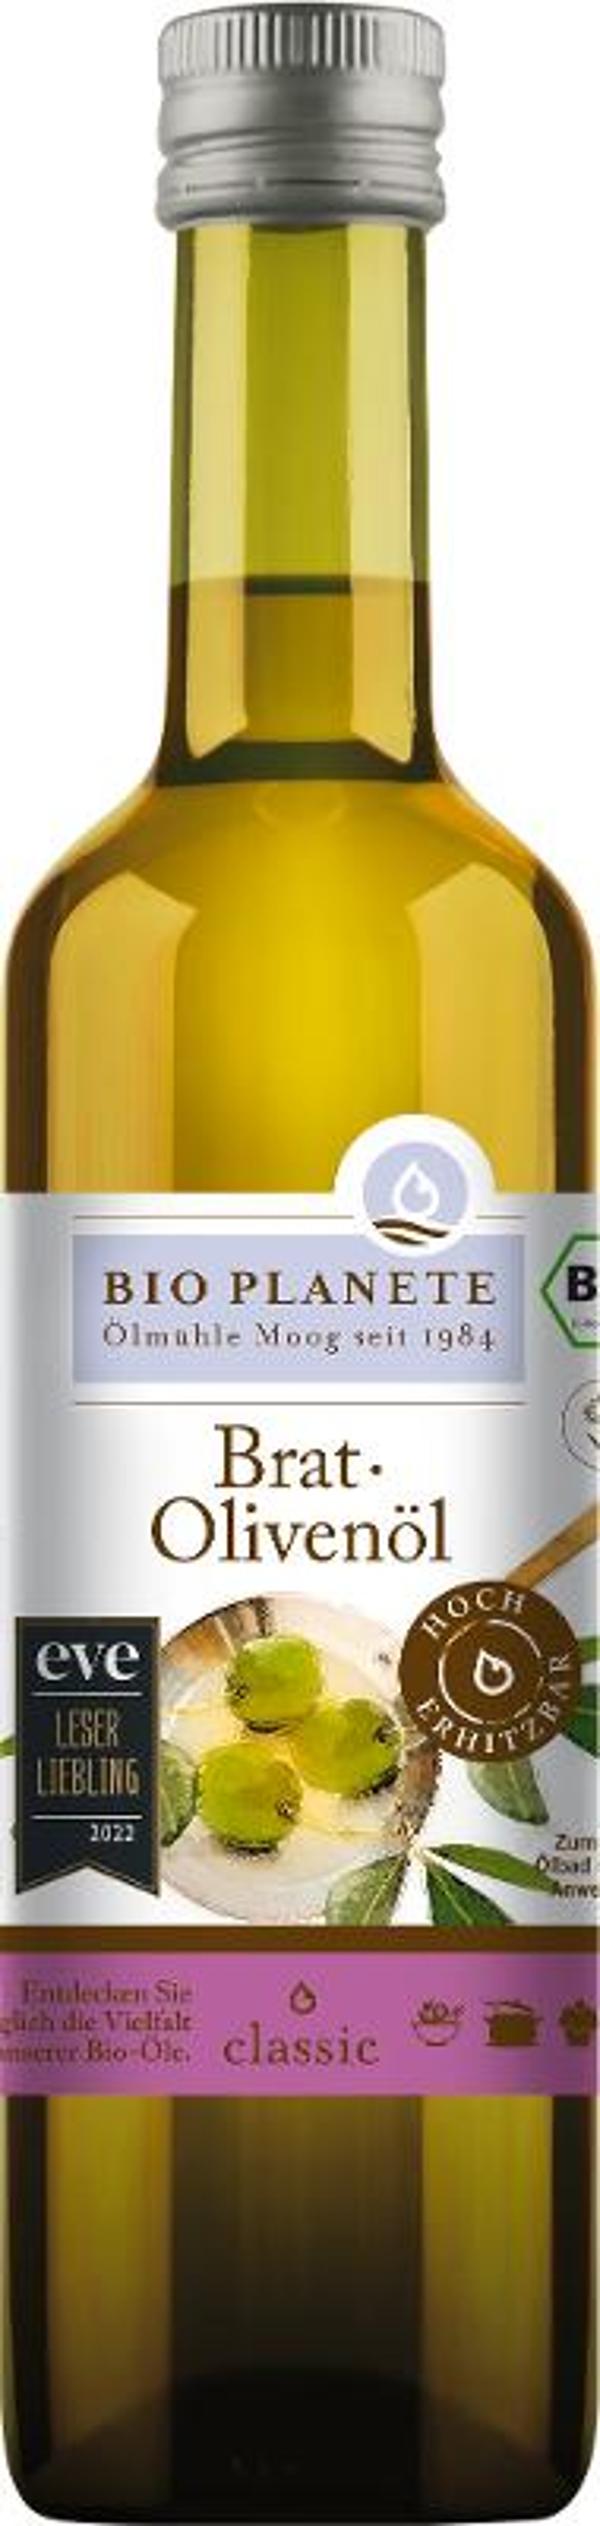 Produktfoto zu Brat Olivenöl 0,5 l Bio Planet